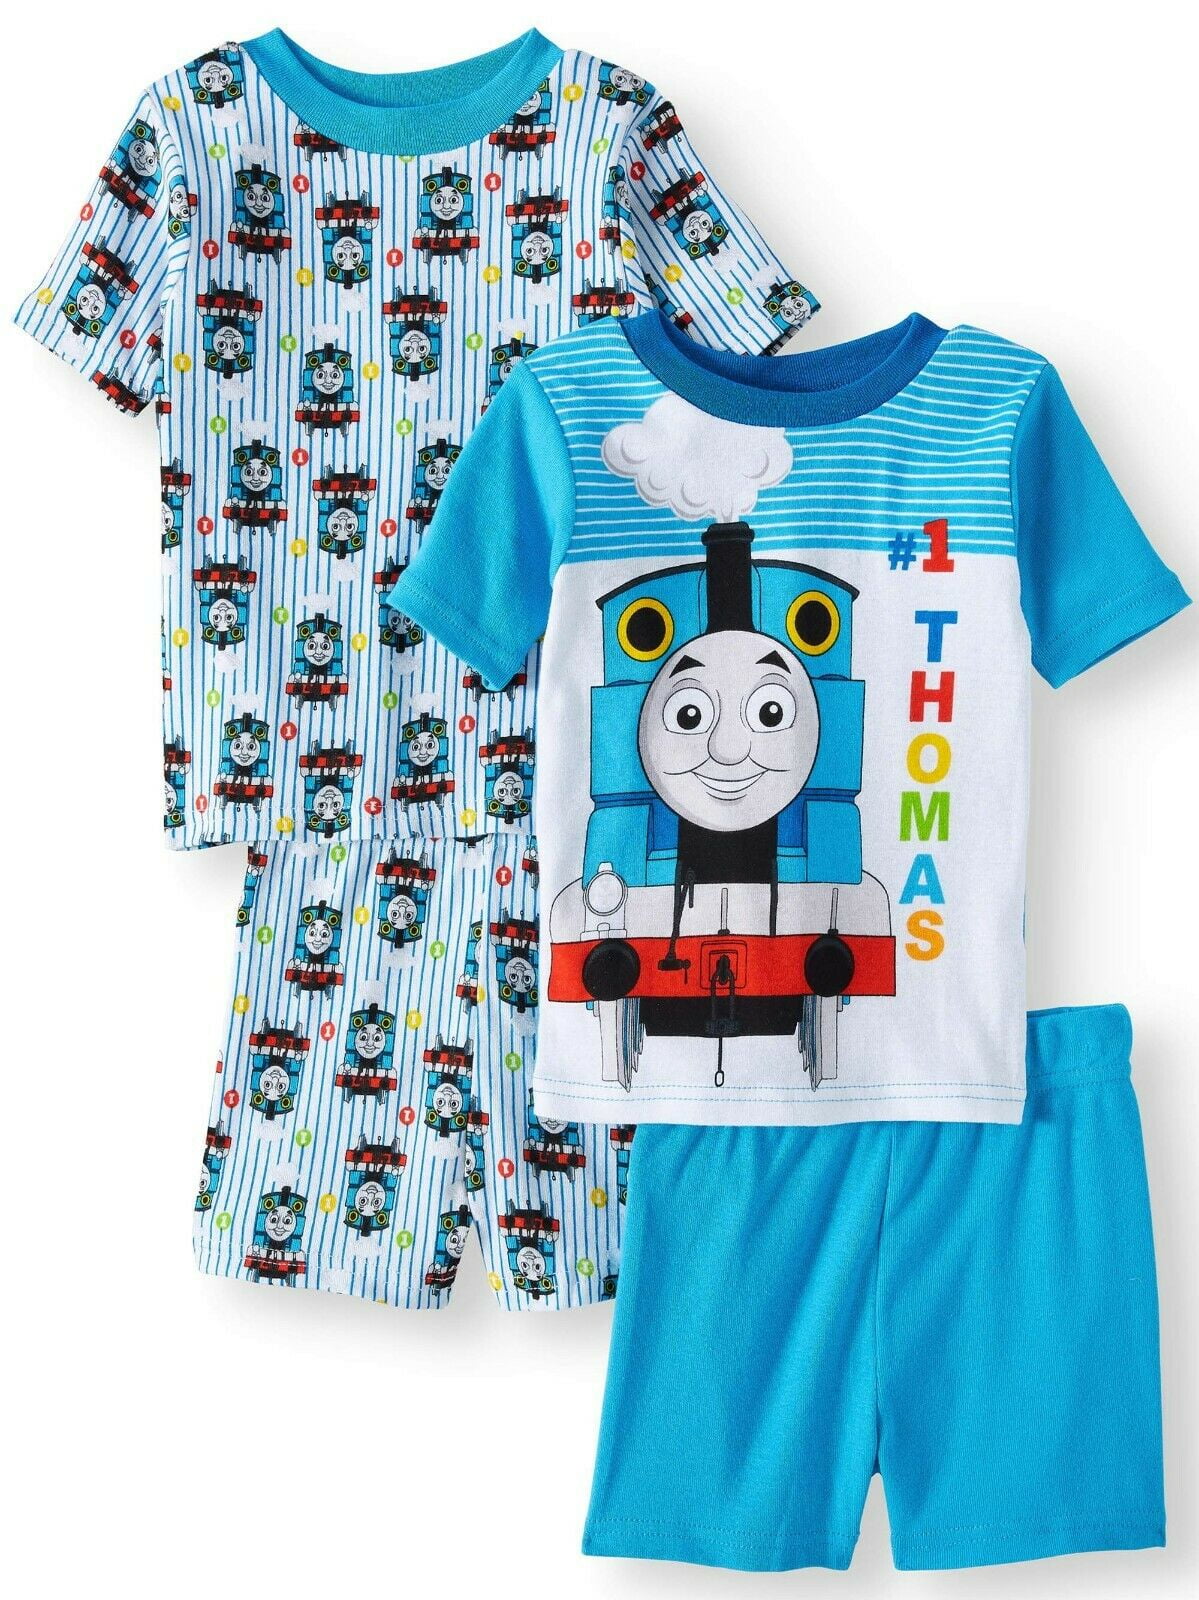 Thomas & Friends Toddler Boys 3 piece Shorts Pajamas Set 